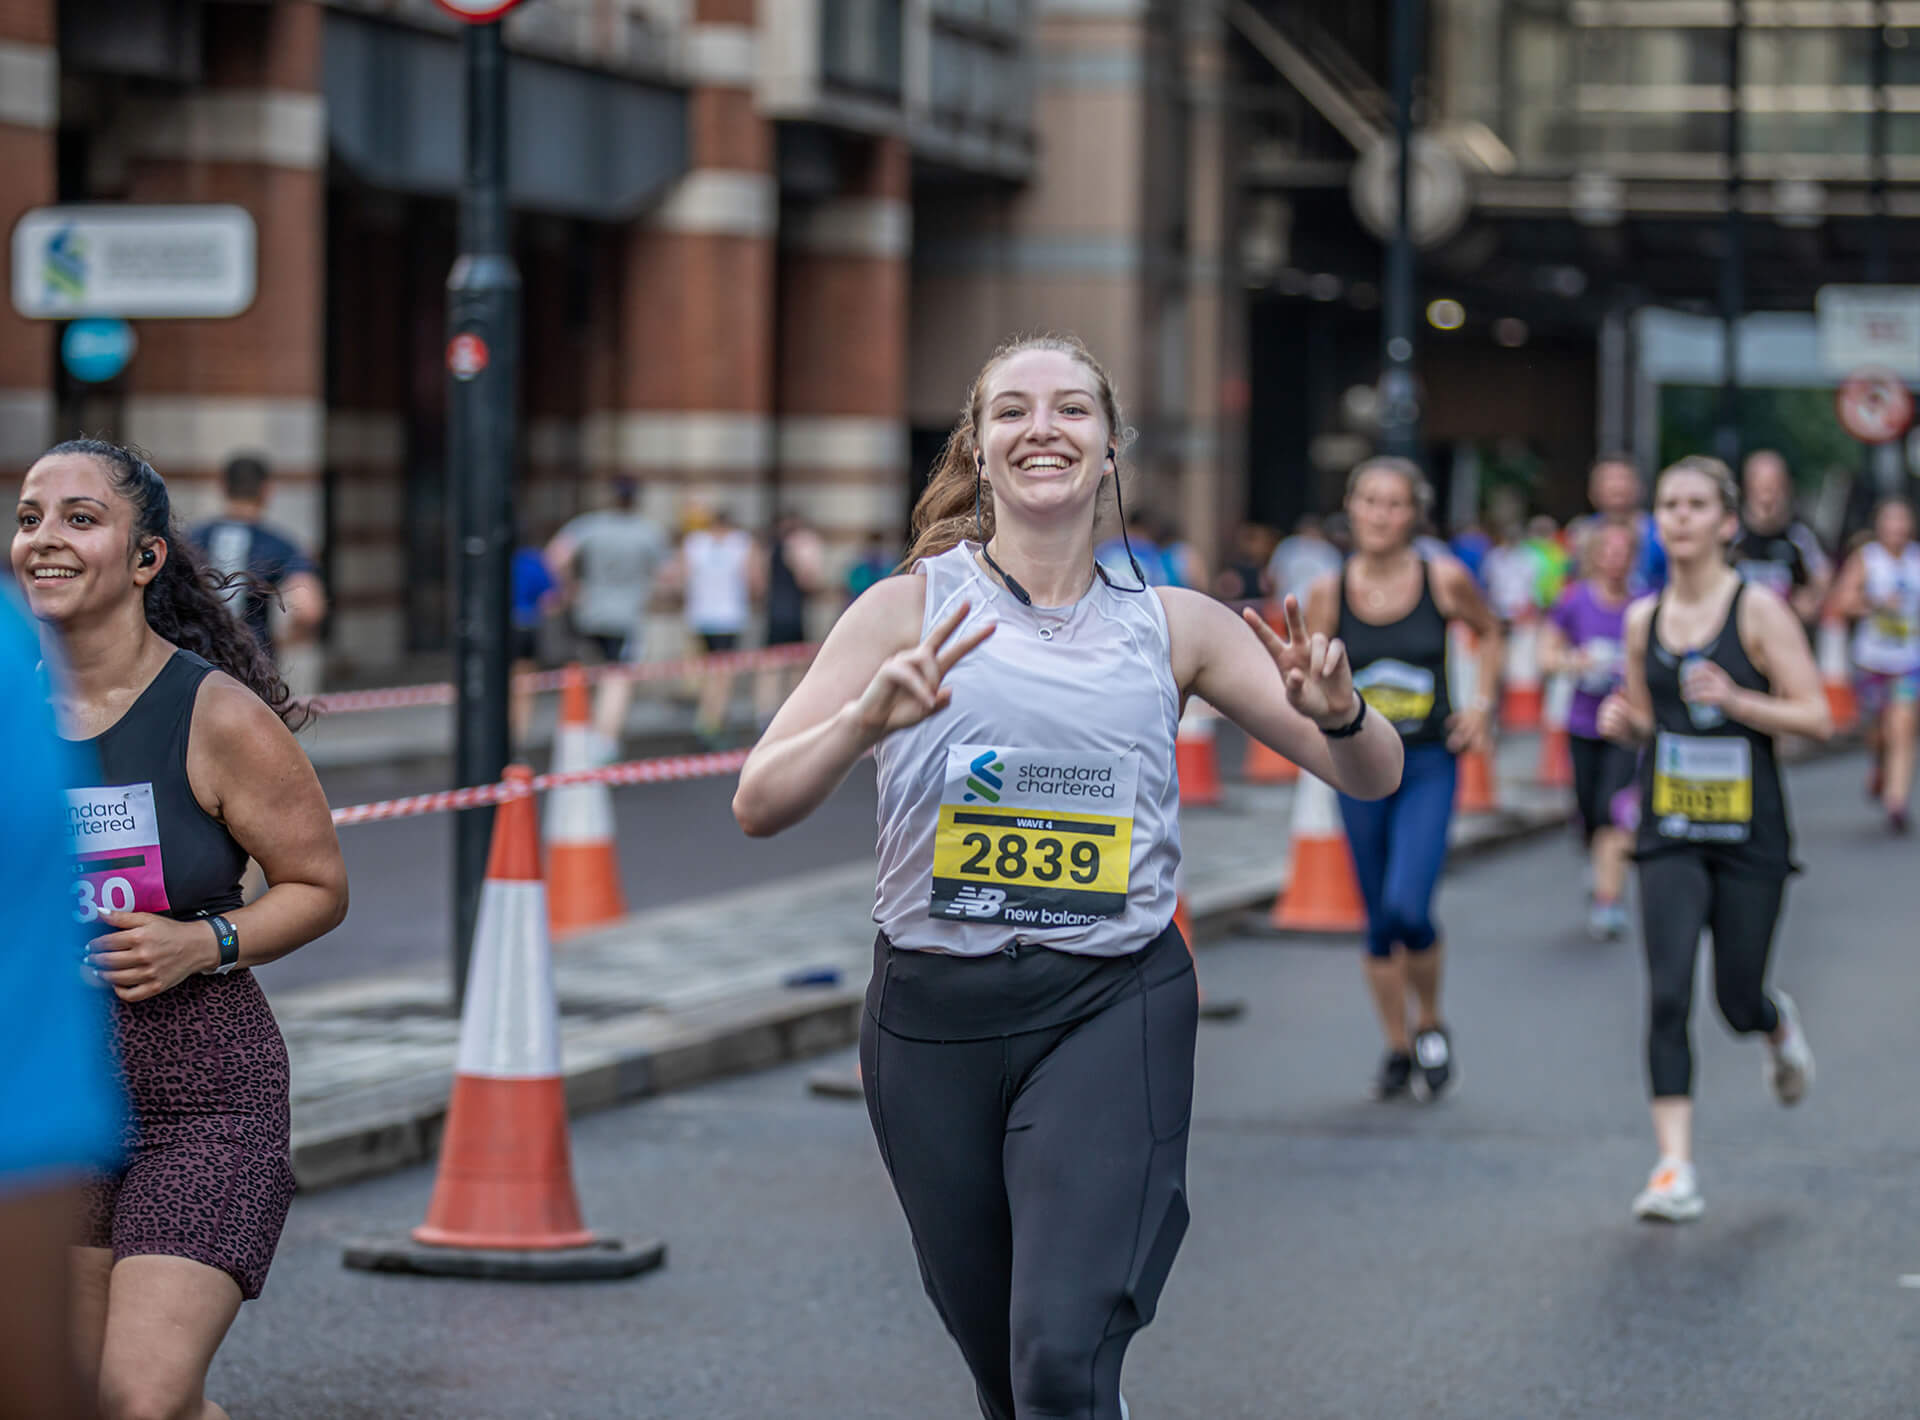 A woman smiles and makes V sign as she runs